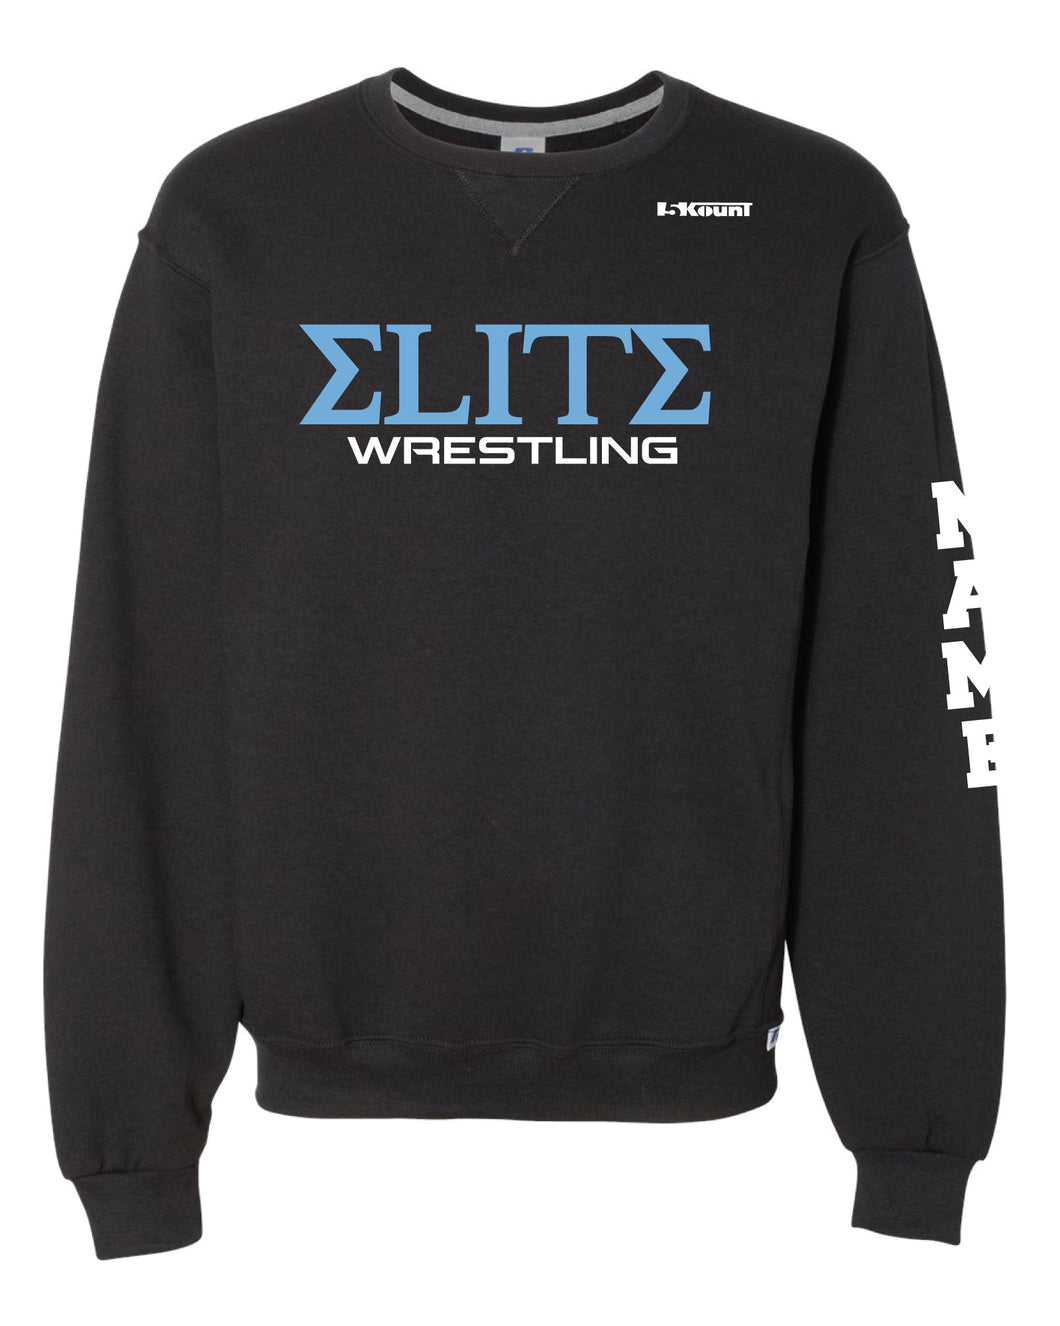 Elite Wrestling Russell Athletic Cotton Crewneck Sweatshirt - Black - 5KounT2018